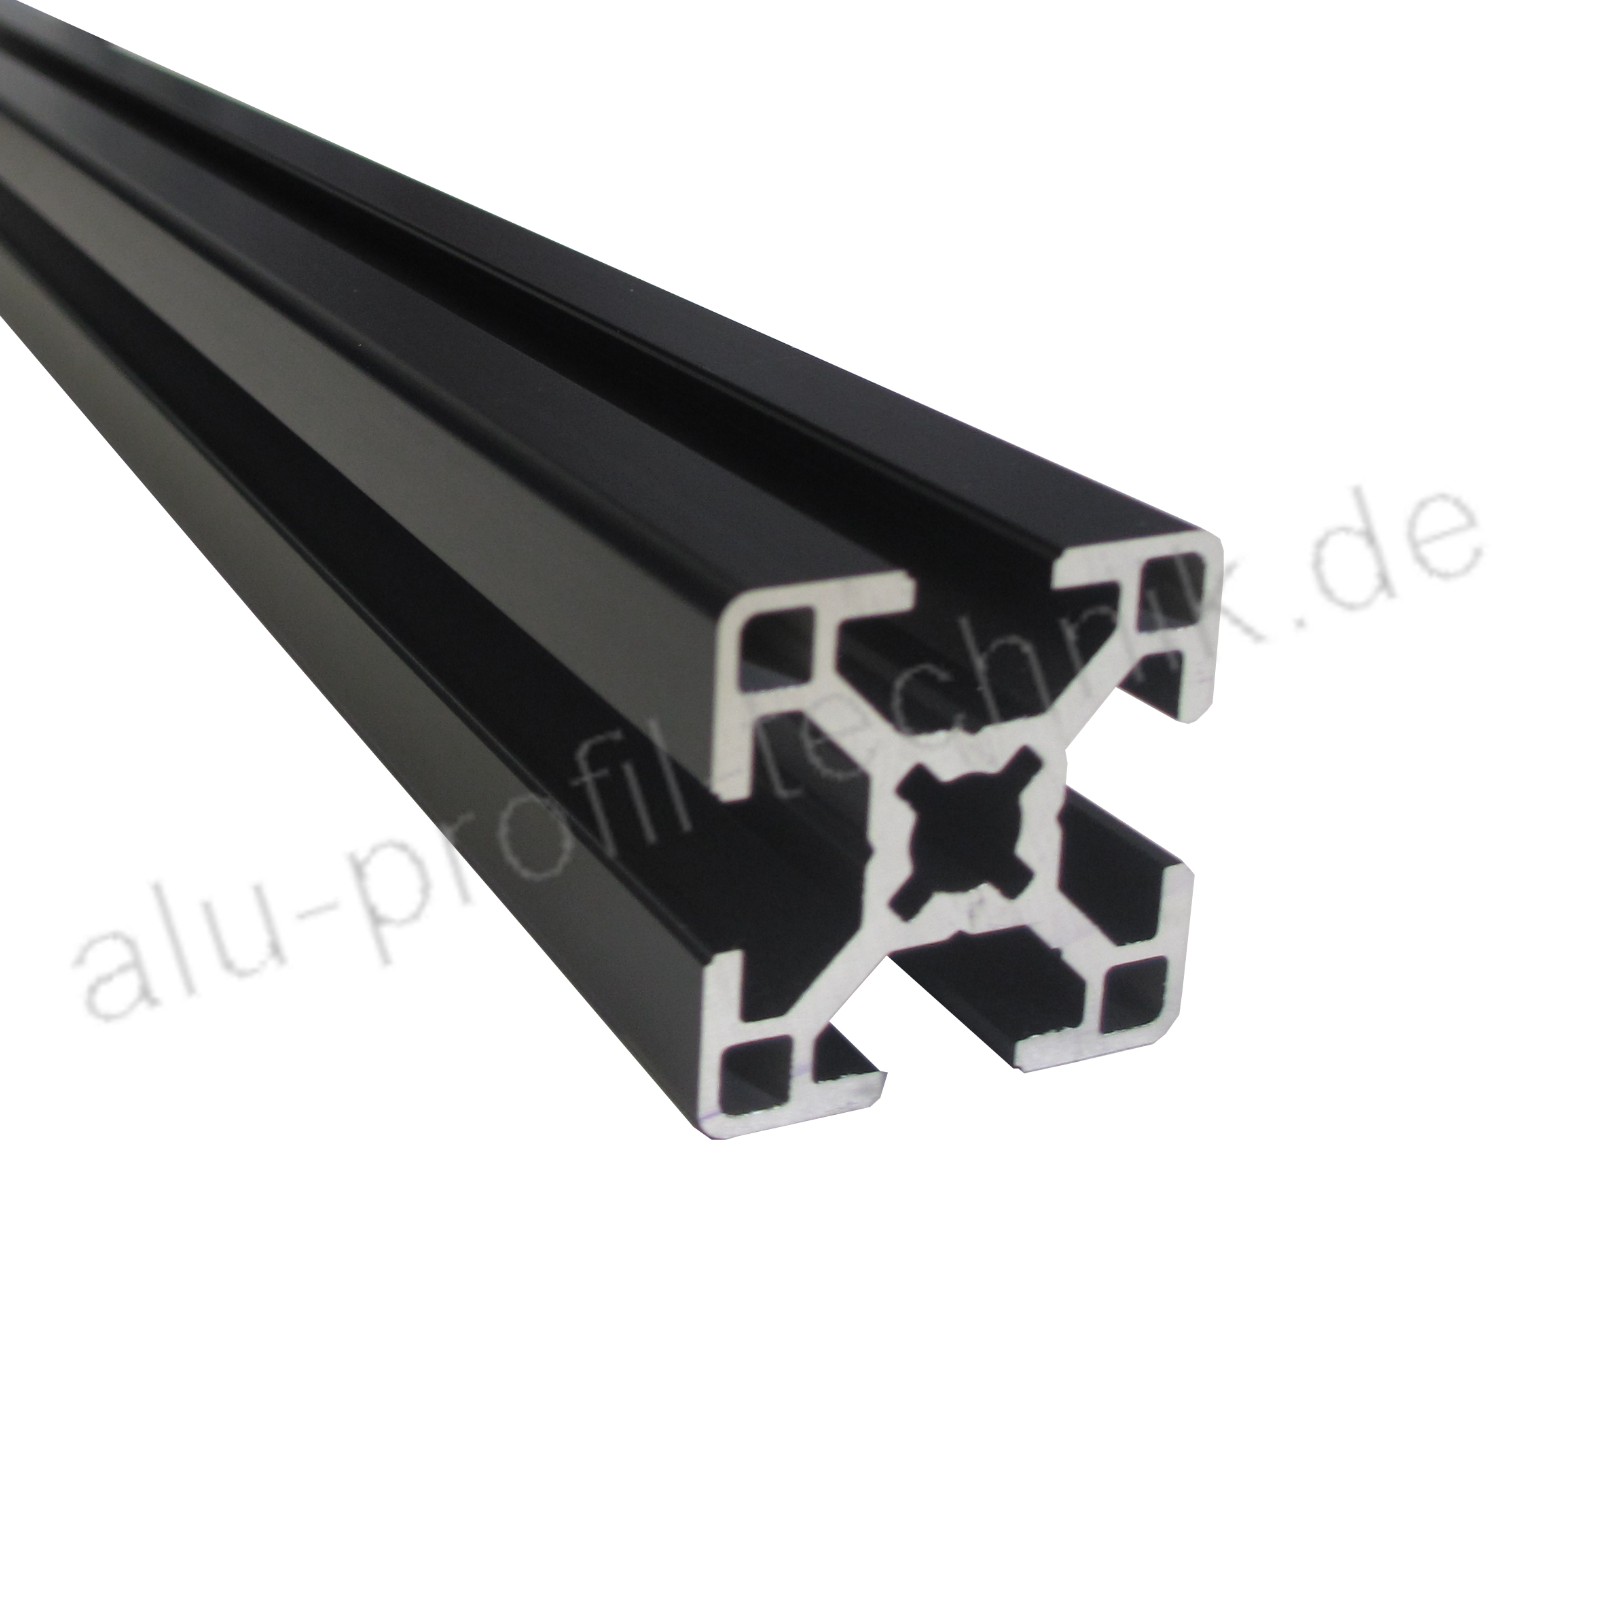 Aluminiumprofil schwarz 30x30L B-Typ Nut 8 30 x 30 ALU Profil bis 2m leicht 